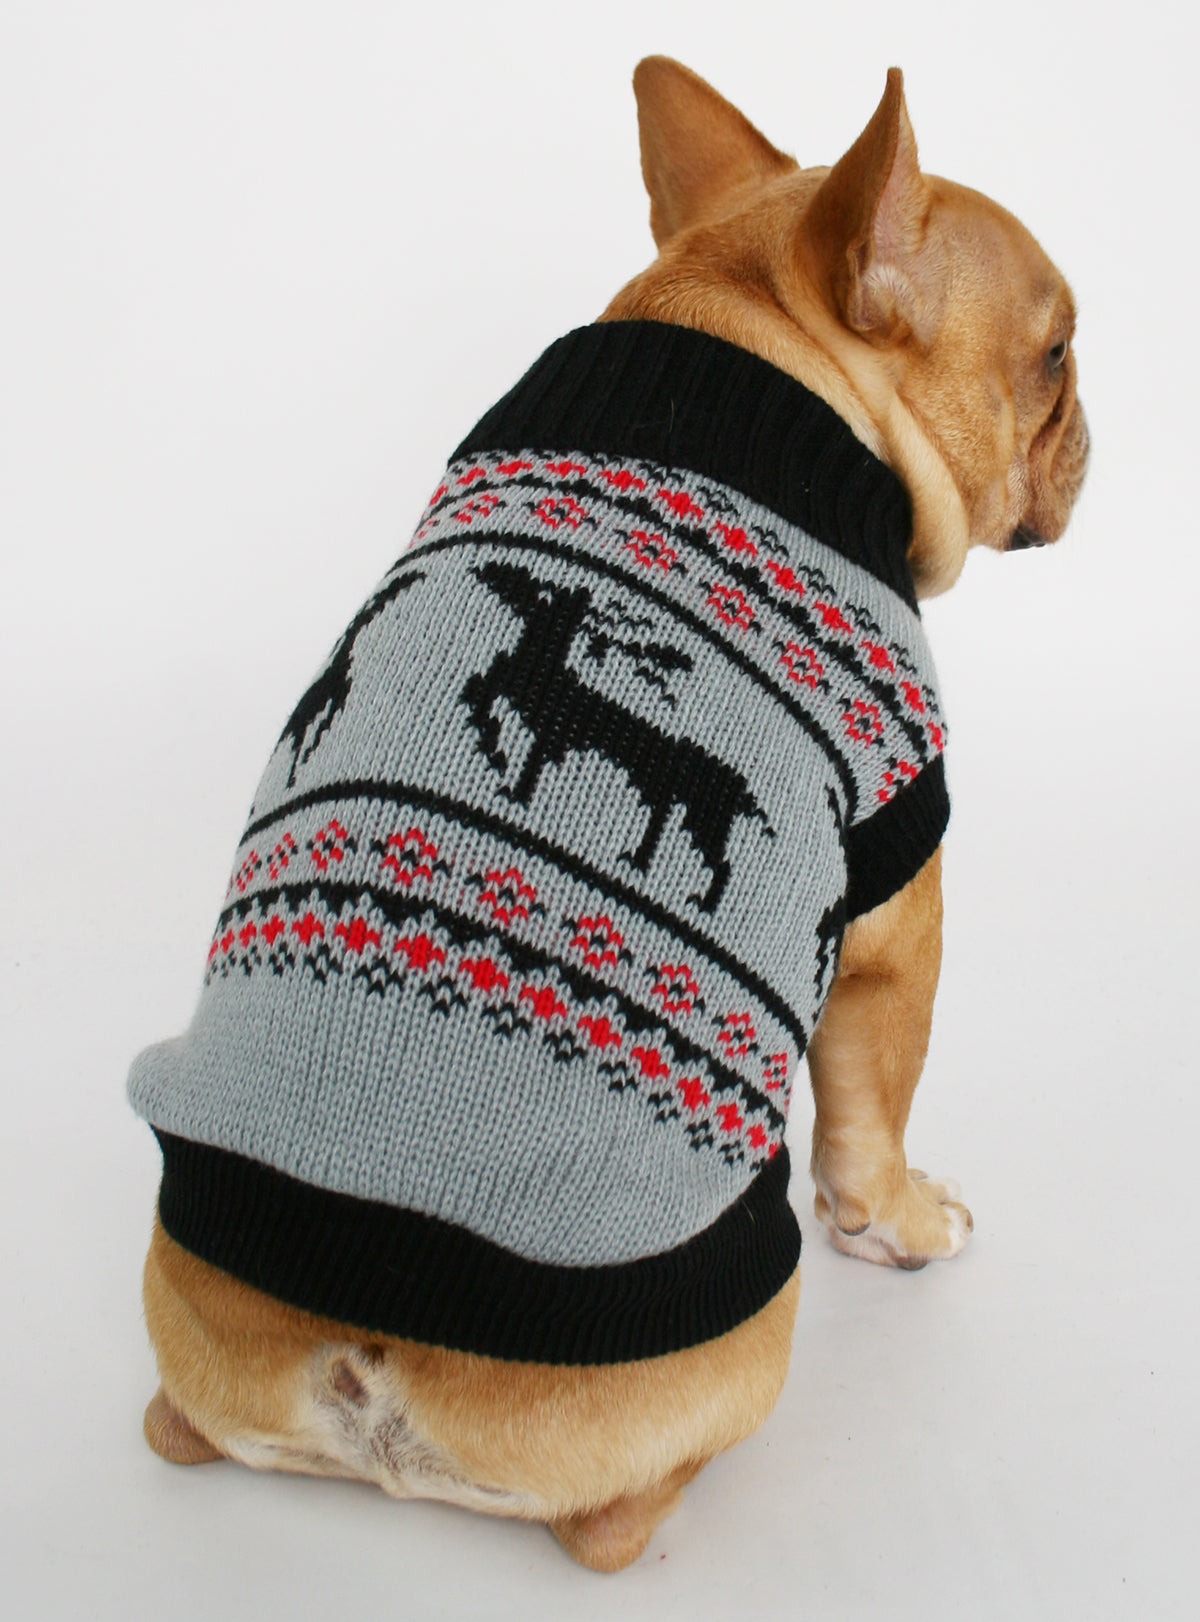 The Twin Deer Dog Sweater